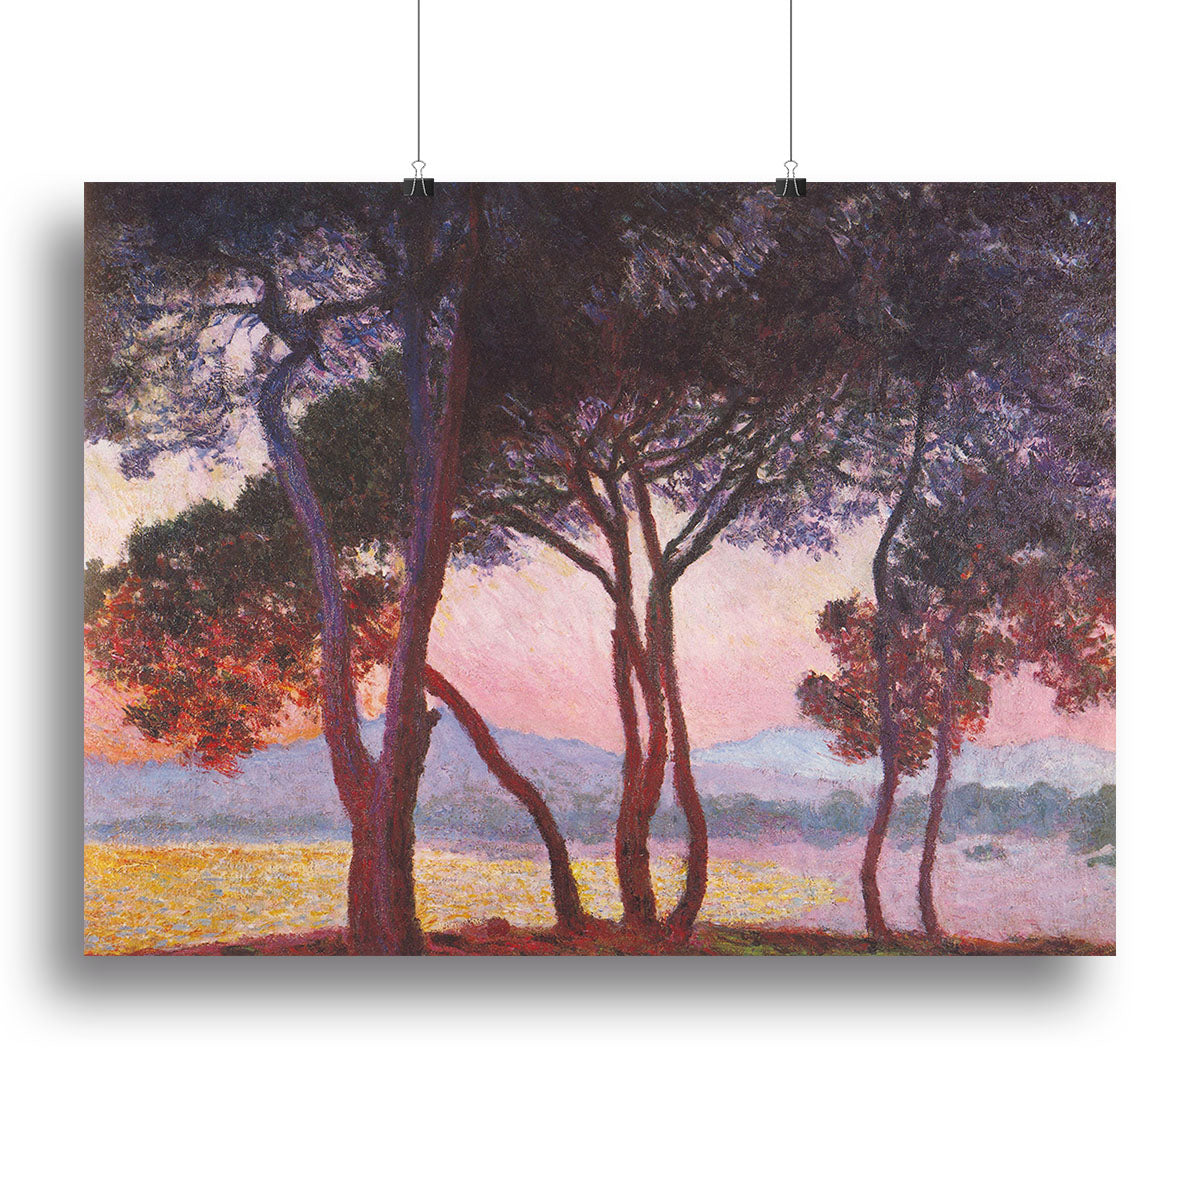 Juan les Pins by Monet Canvas Print or Poster - Canvas Art Rocks - 2